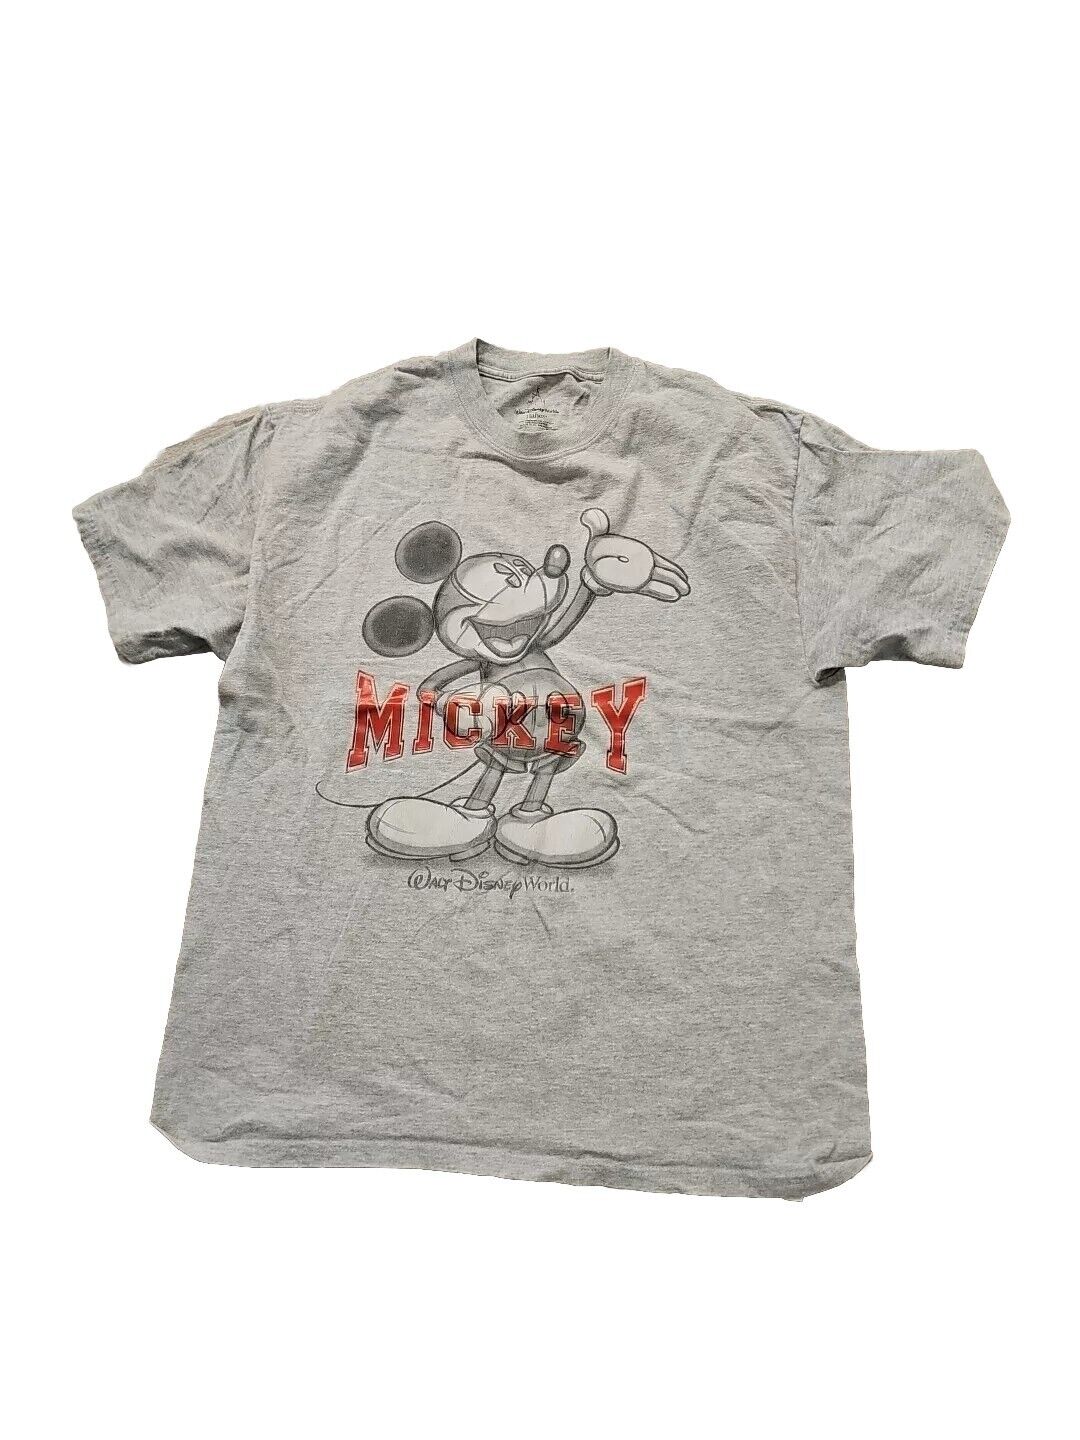 VINTAGE Walt Disney World Mickey Mouse T Shirt Adult Size L Hanes